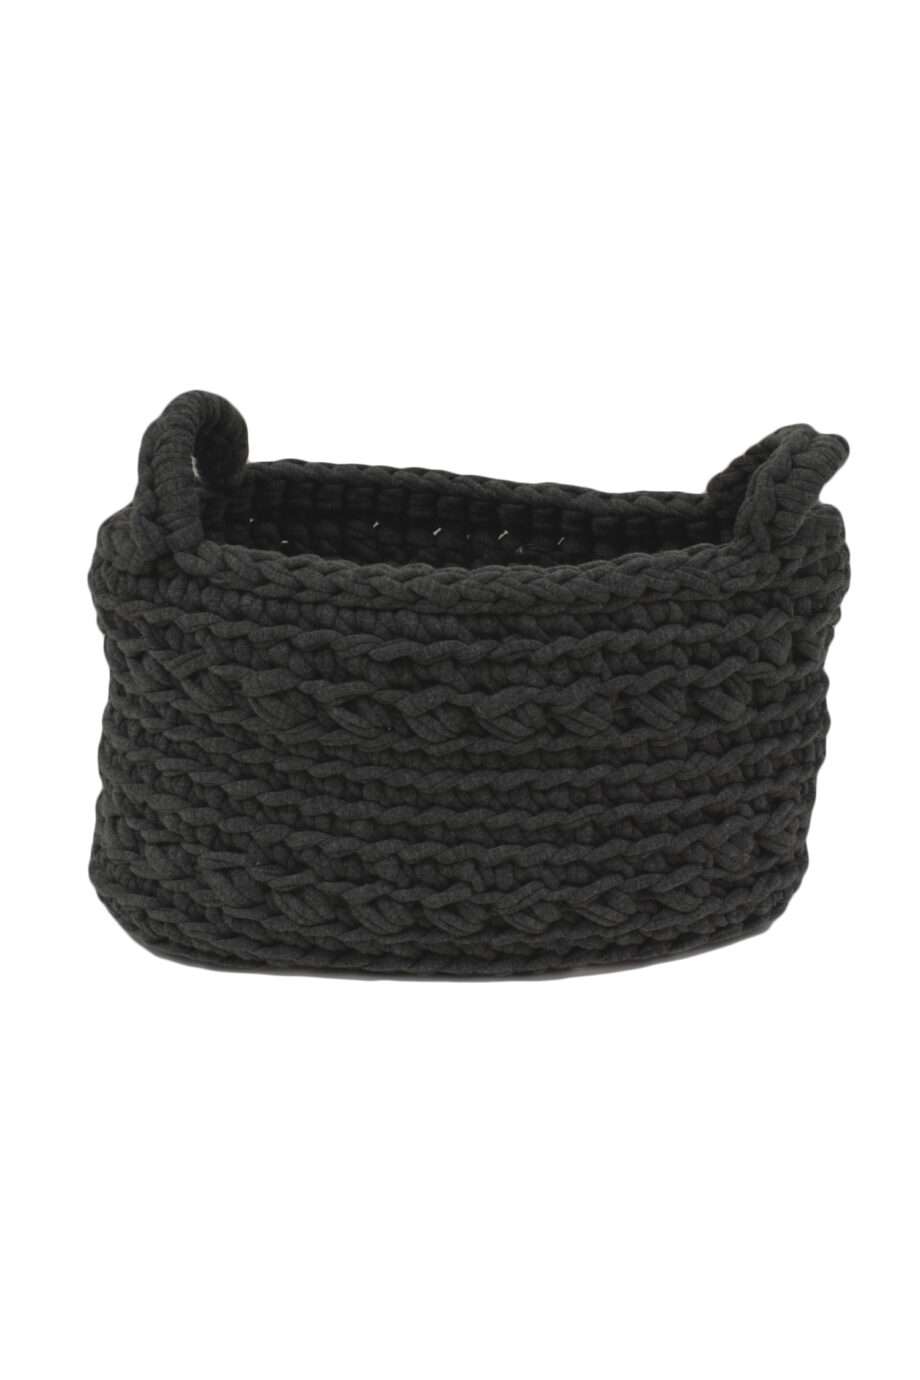 basic anthracite crochet cotton basket xsmall